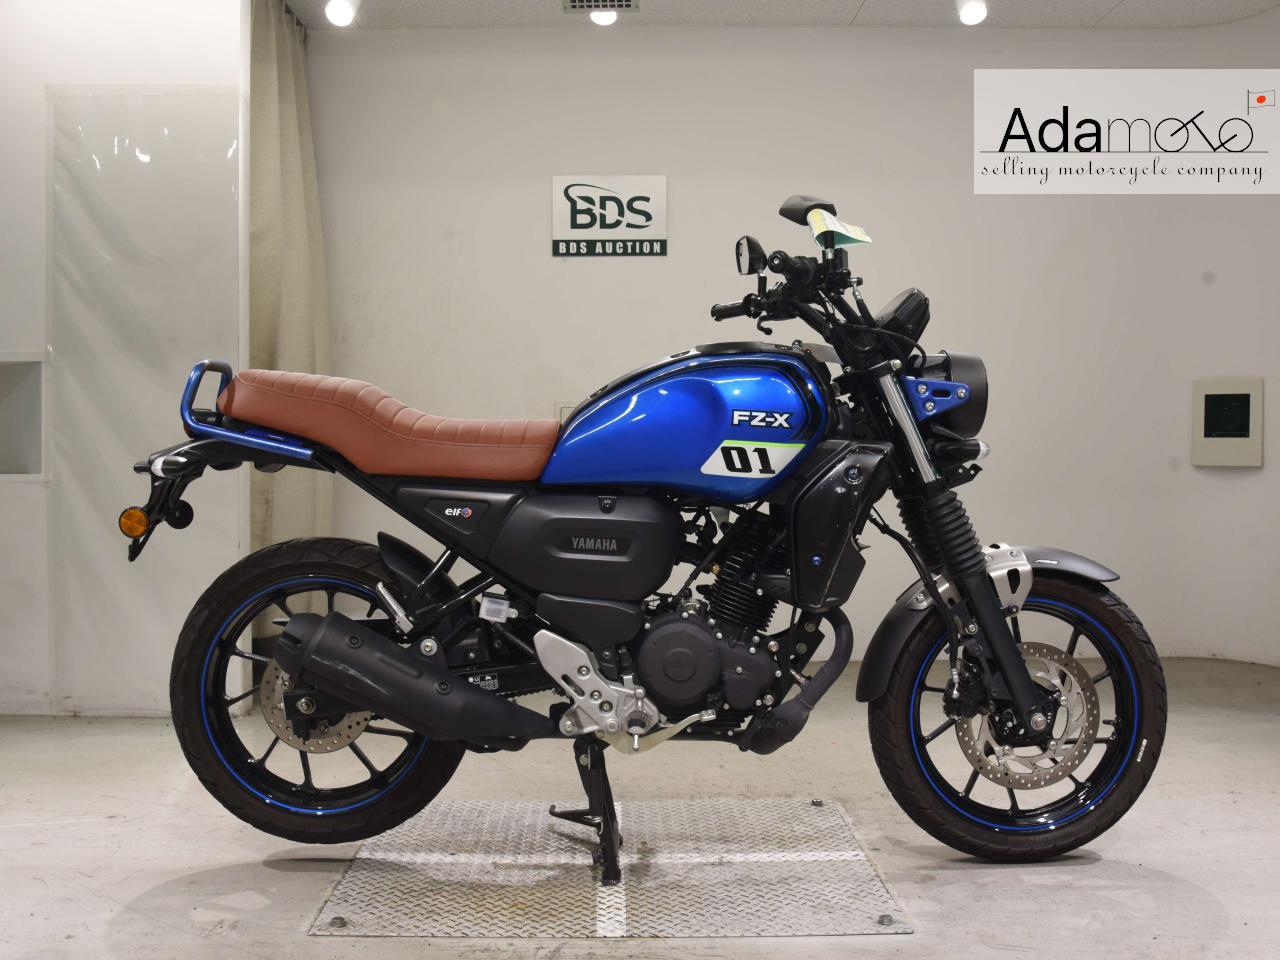 Yamaha FZ X150 - Adamoto - Motorcycles from Japan